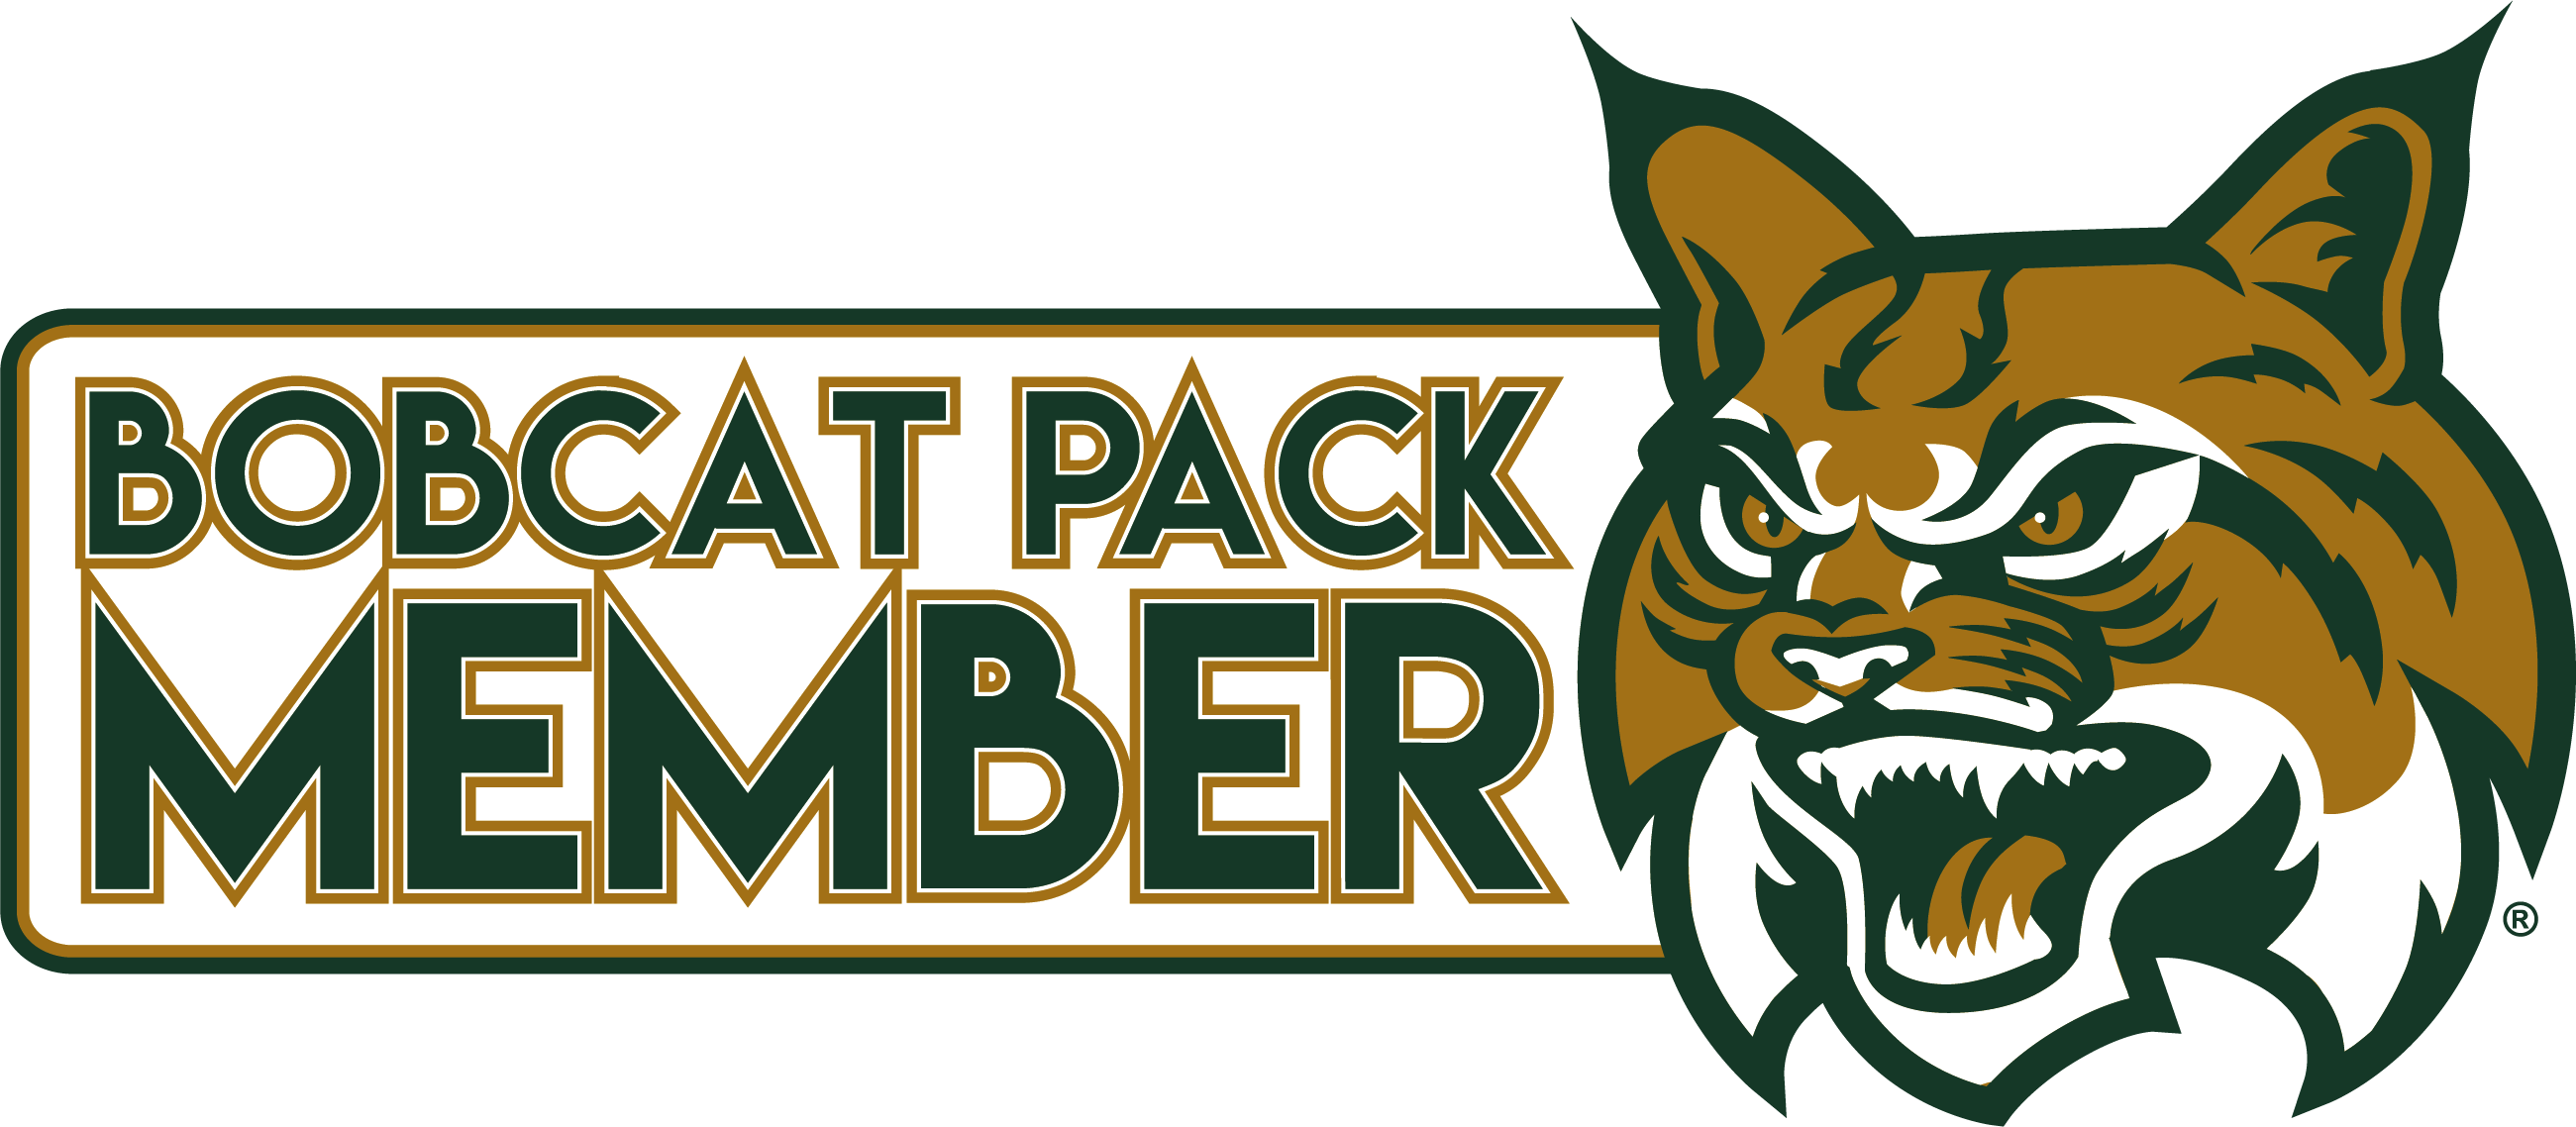 bobcat pack member logo